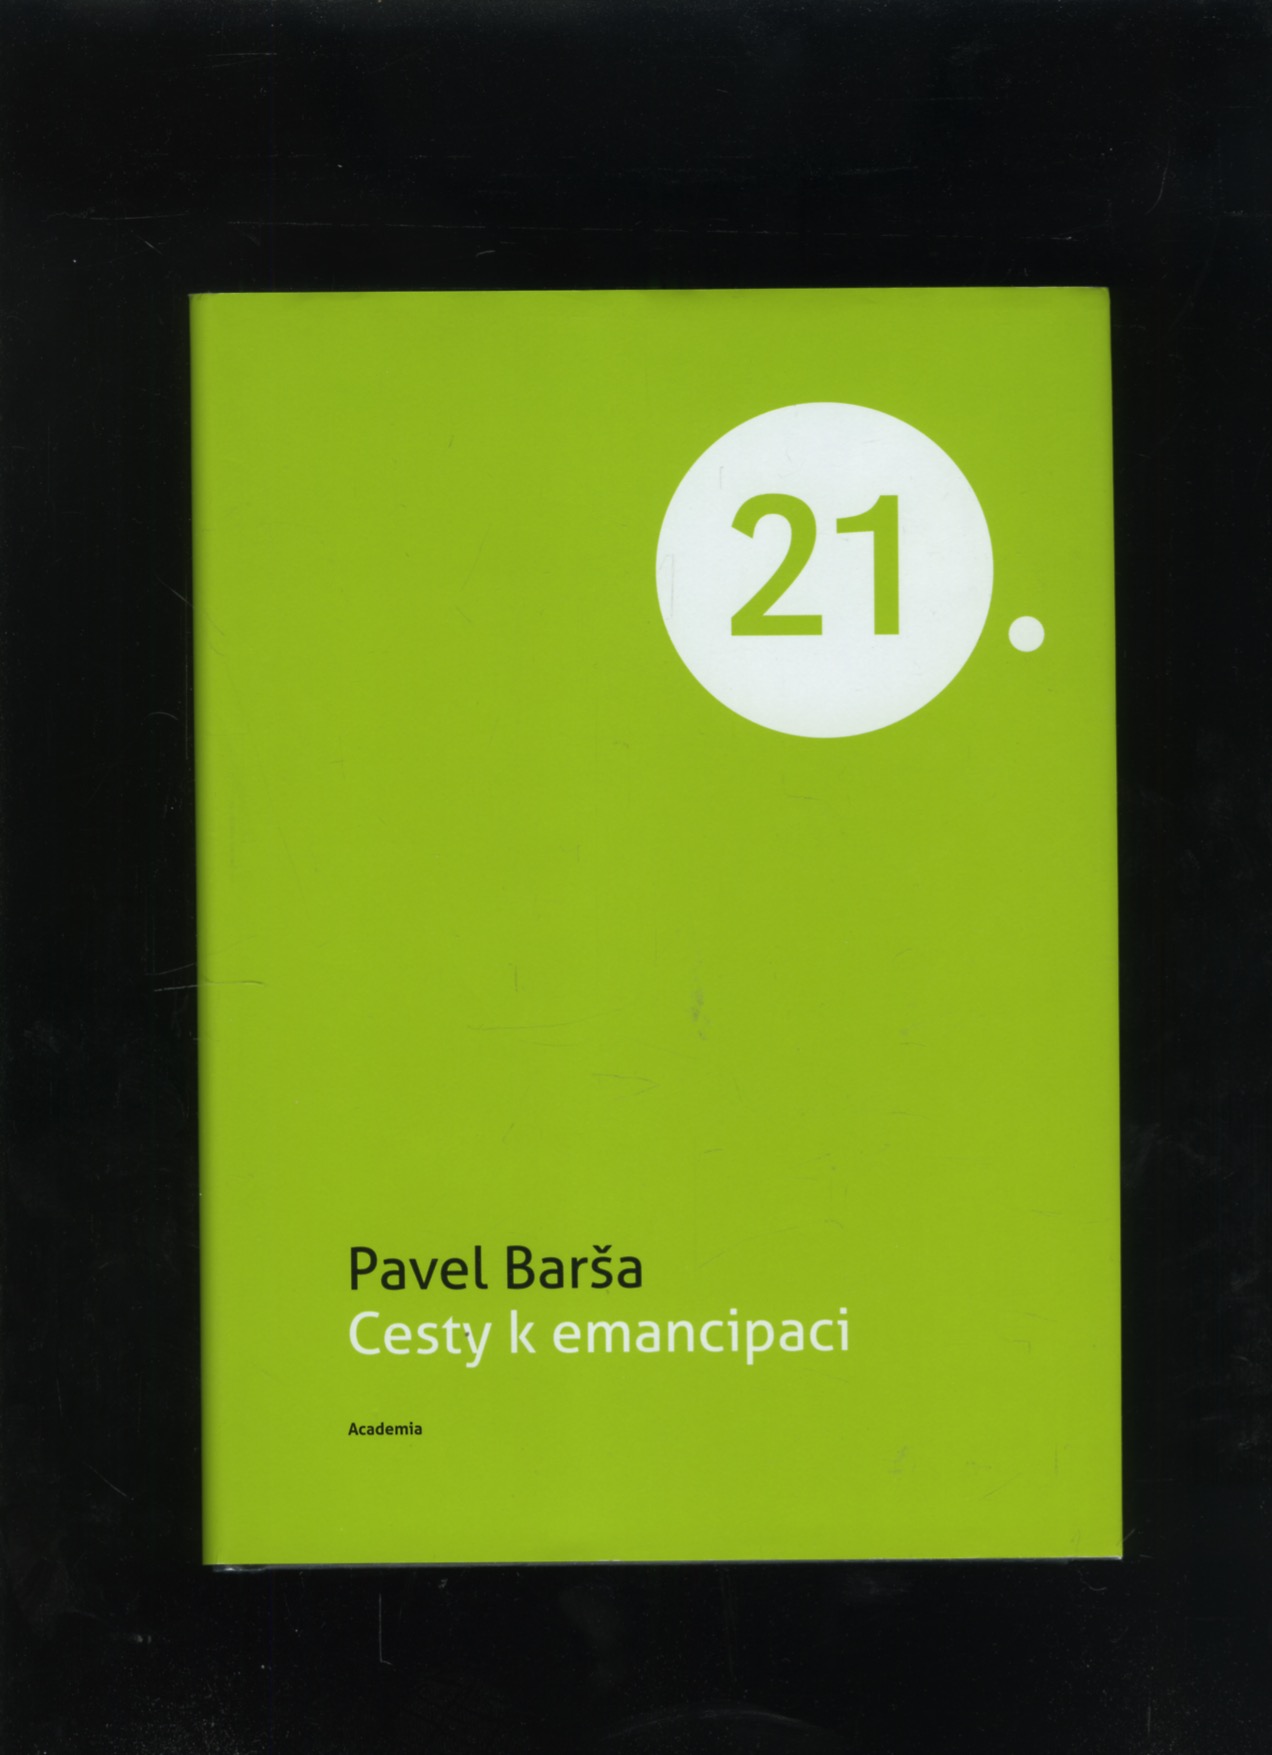 Cesty k emancipaci (Pavel Barša)